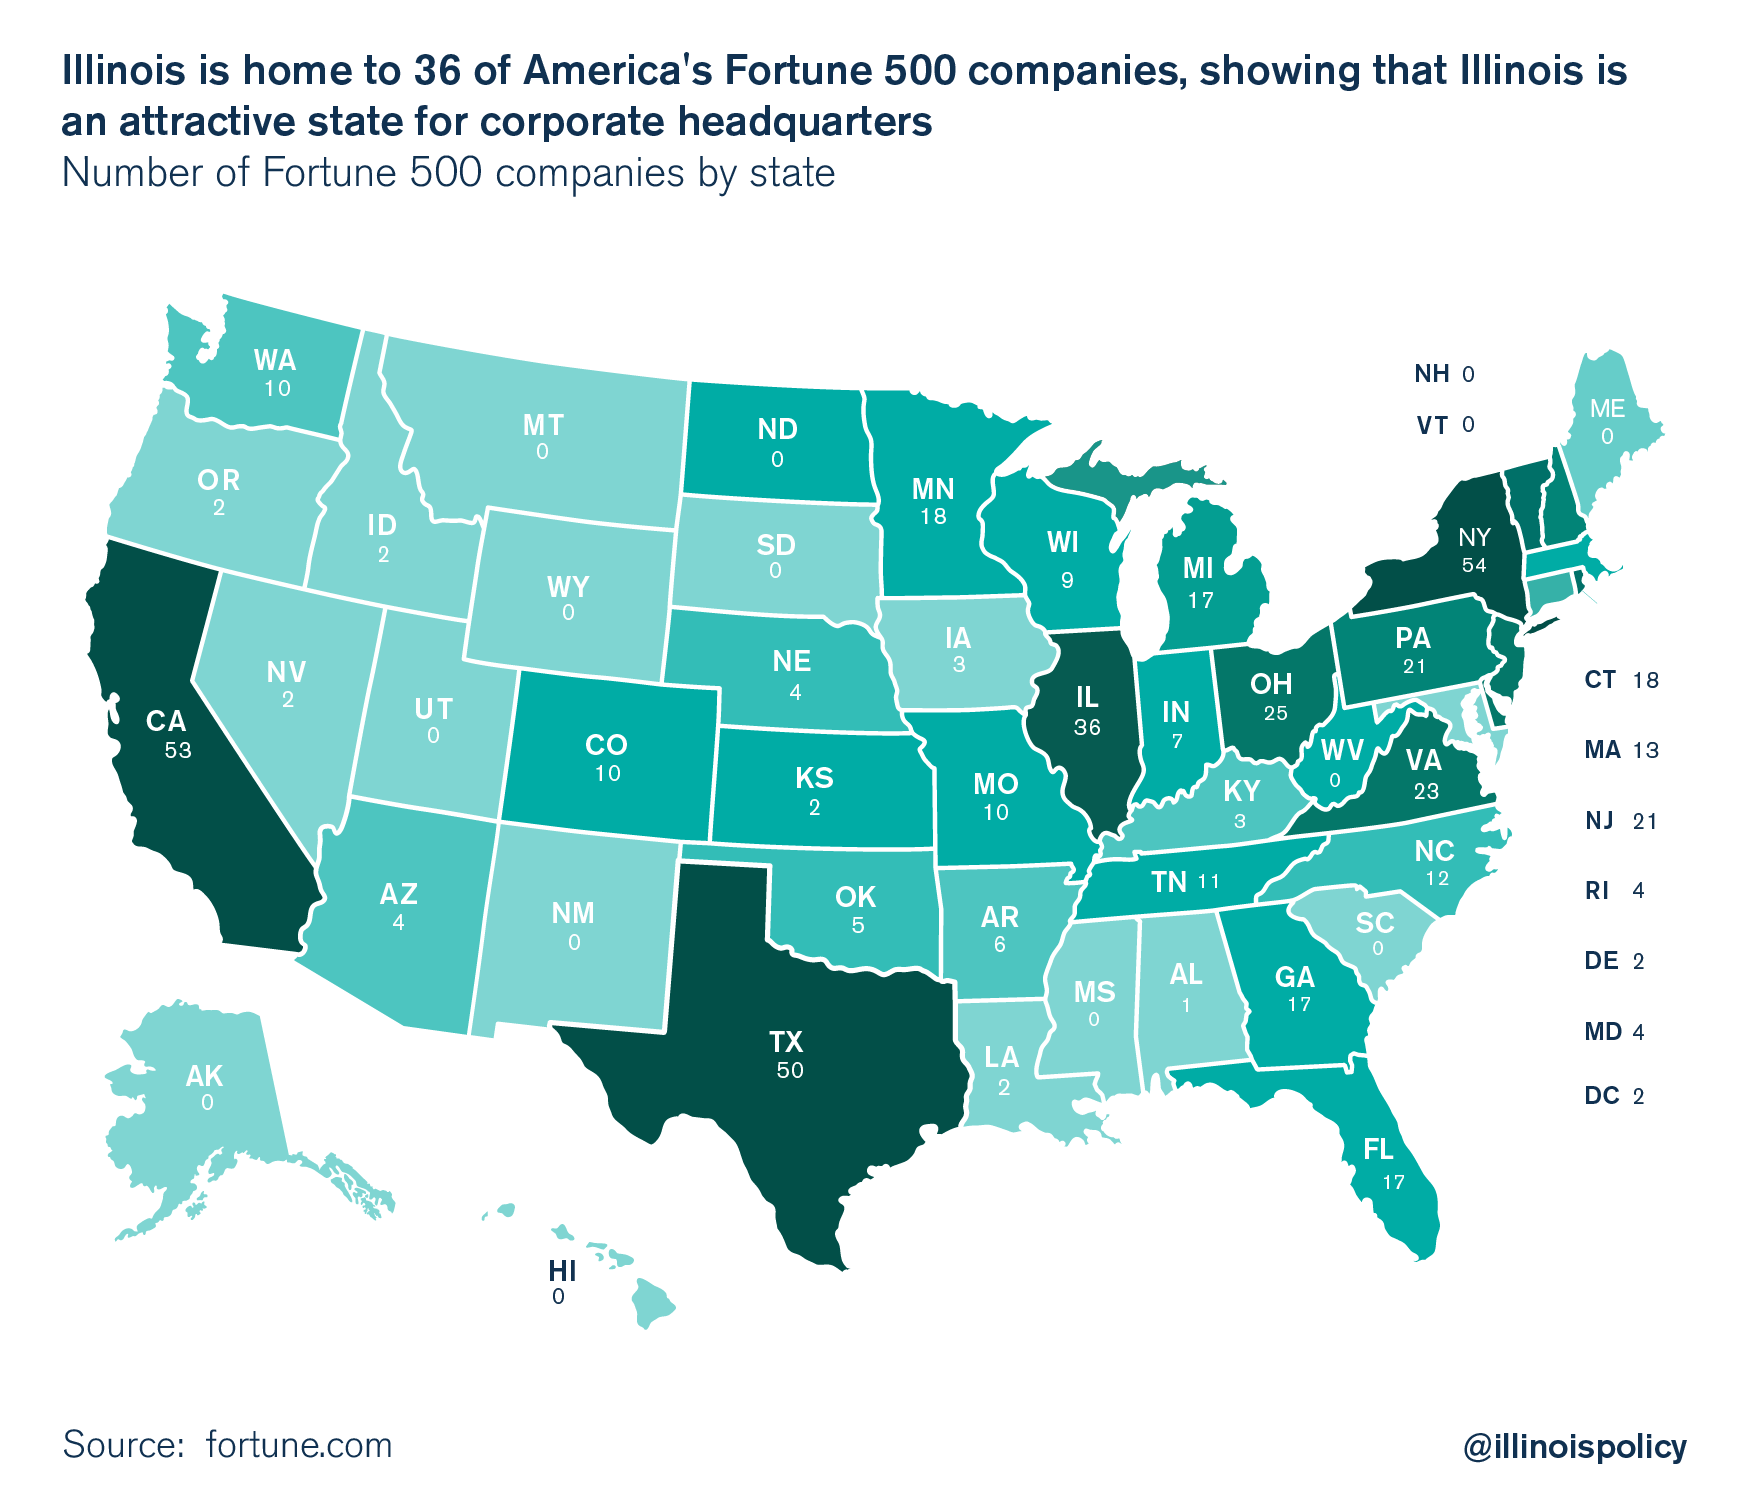 Illinois has 4thmost Fortune 500 corporate headquarters in U.S.